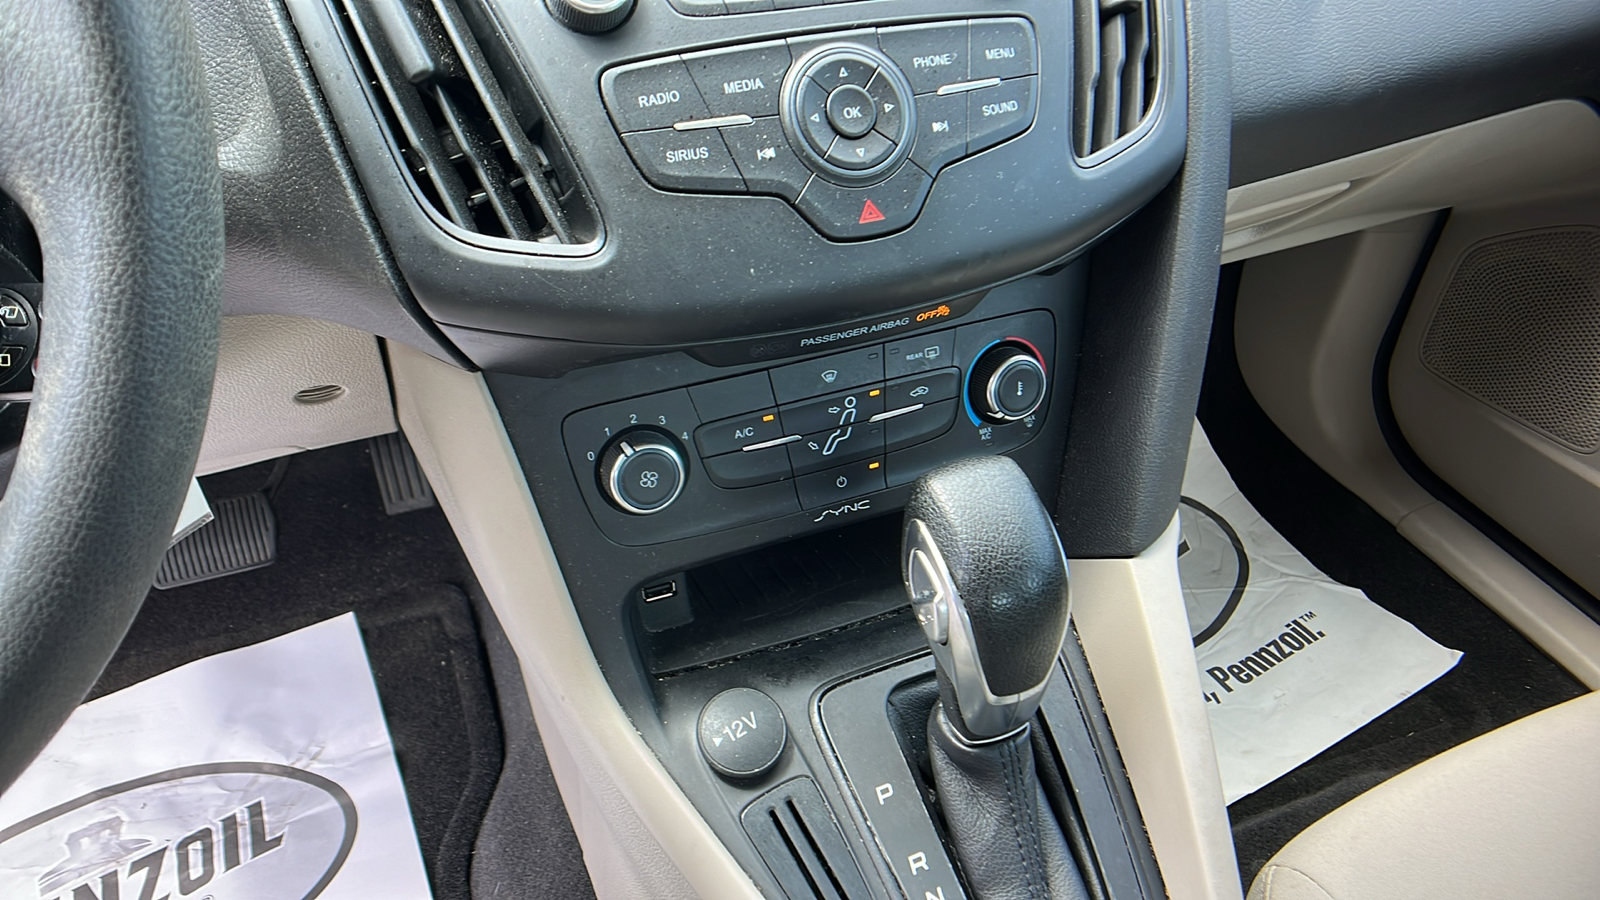 2018 Ford Focus SE 14